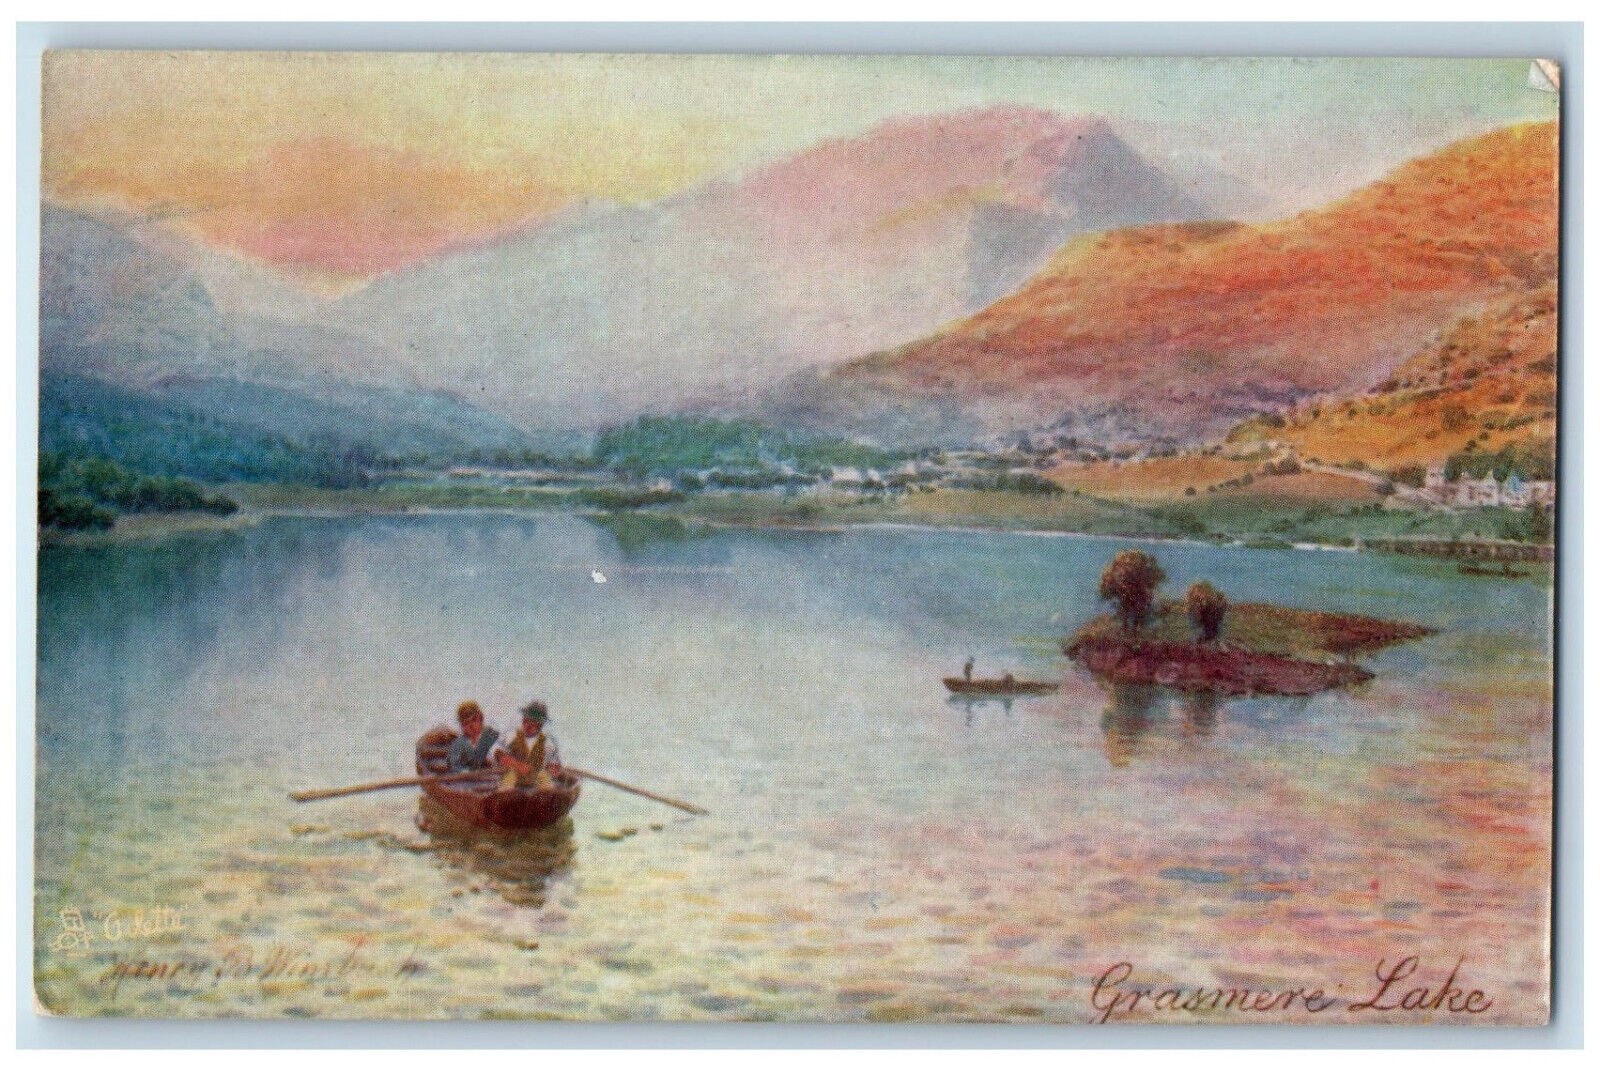 c1910 Grasmere Lake Picturesque English Lakes Cumbria Oilette Tuck Art Postcard